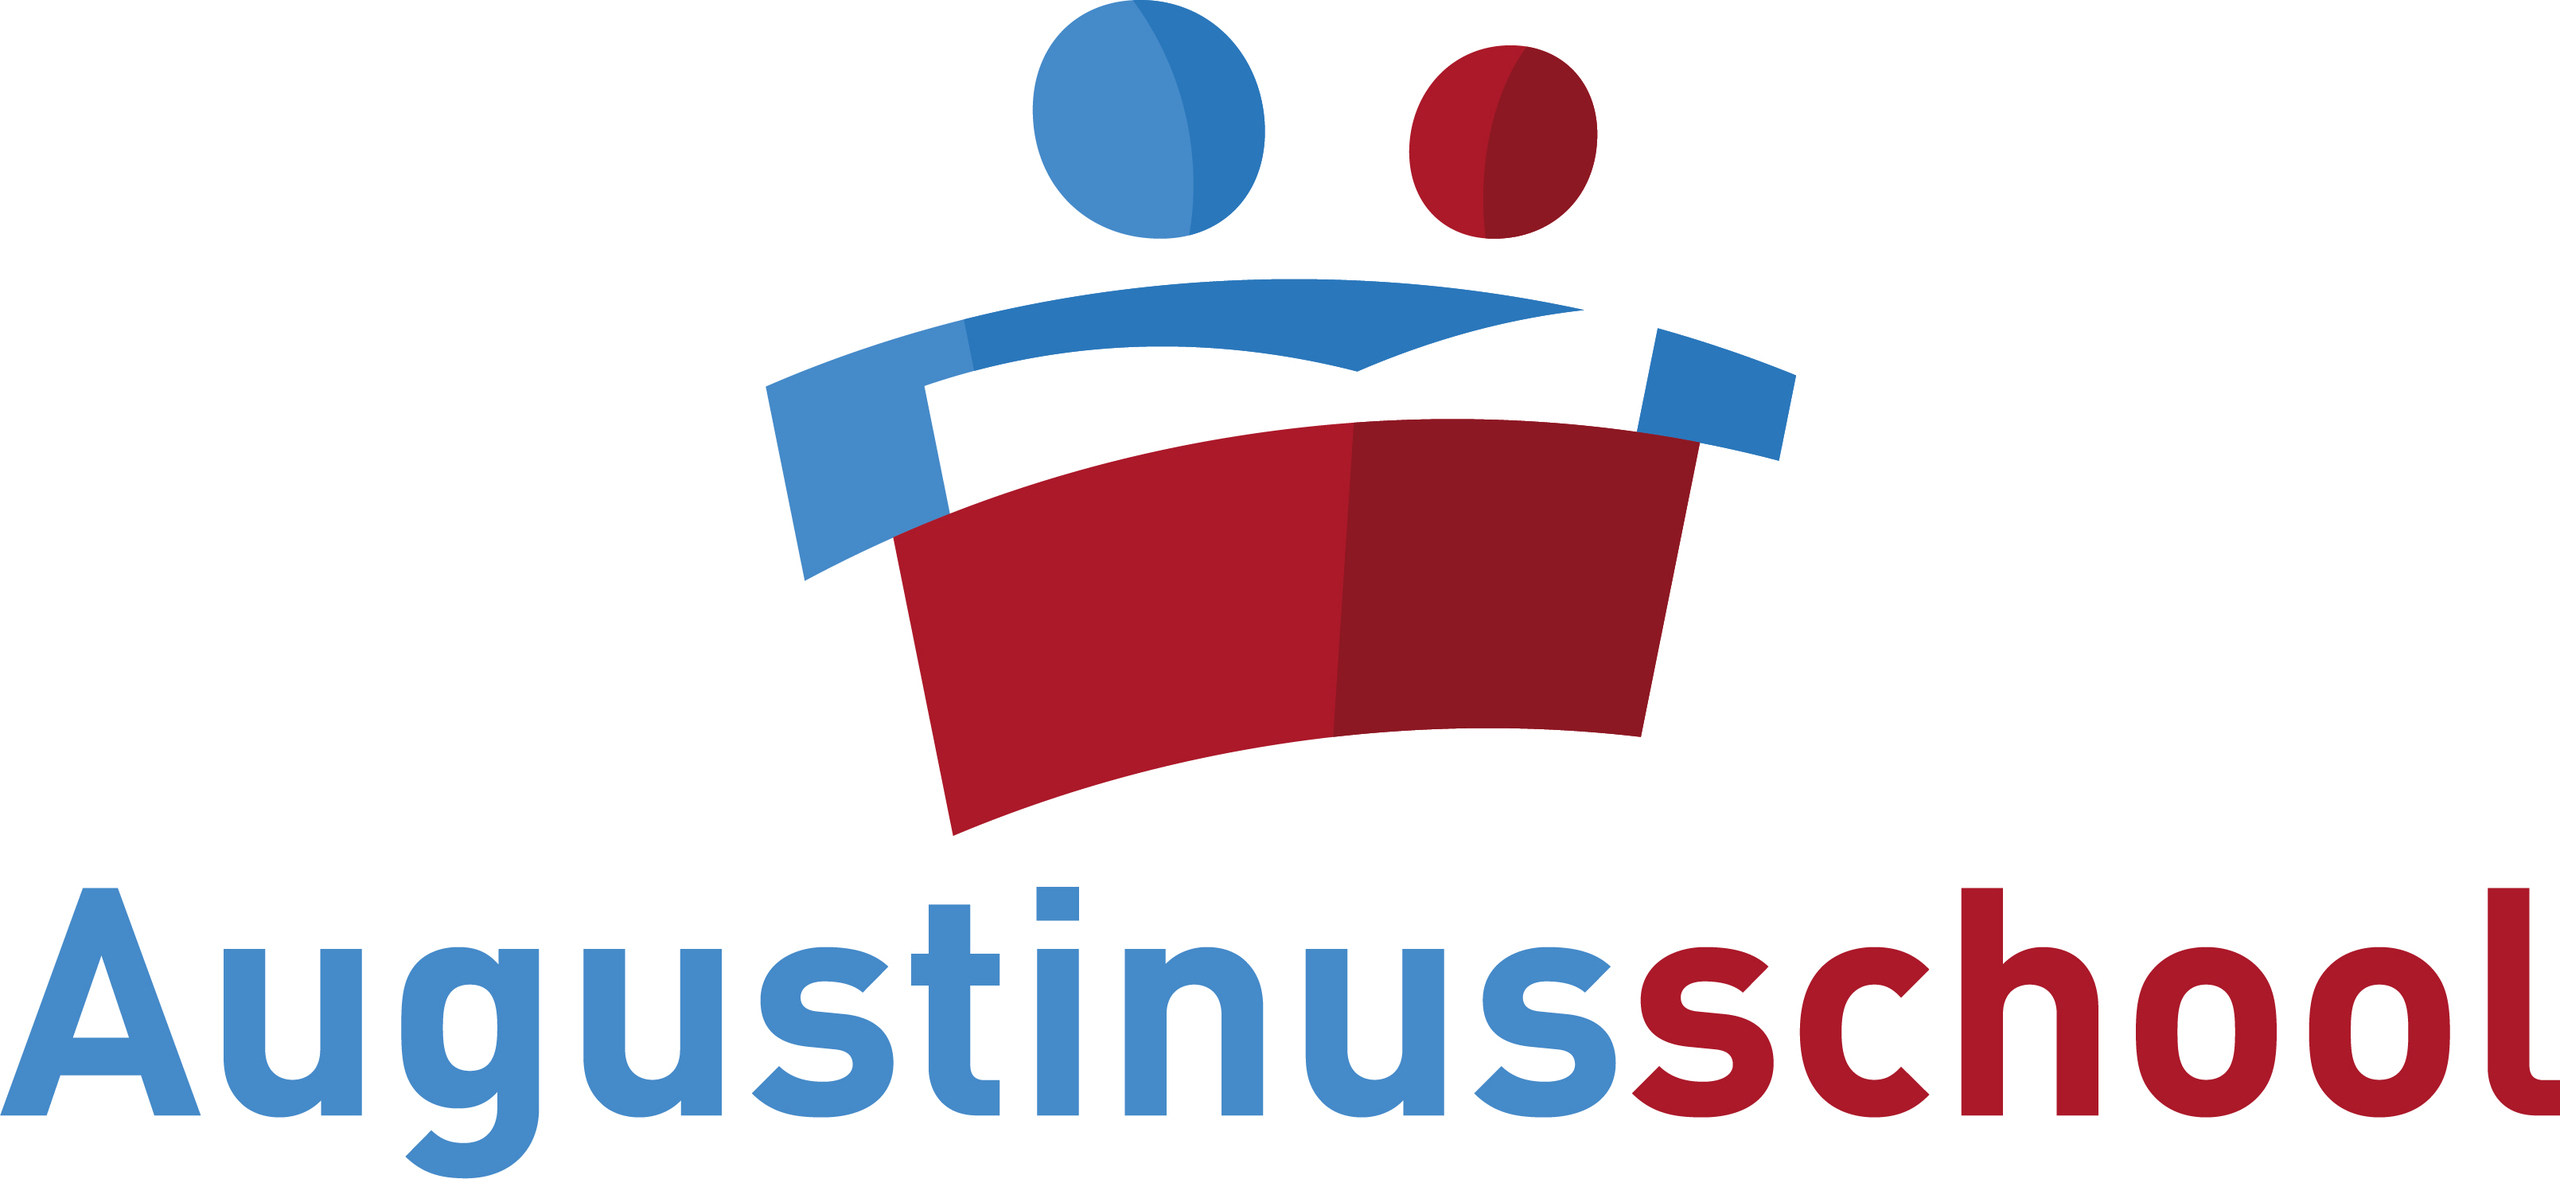 Logo Augustinusschool 